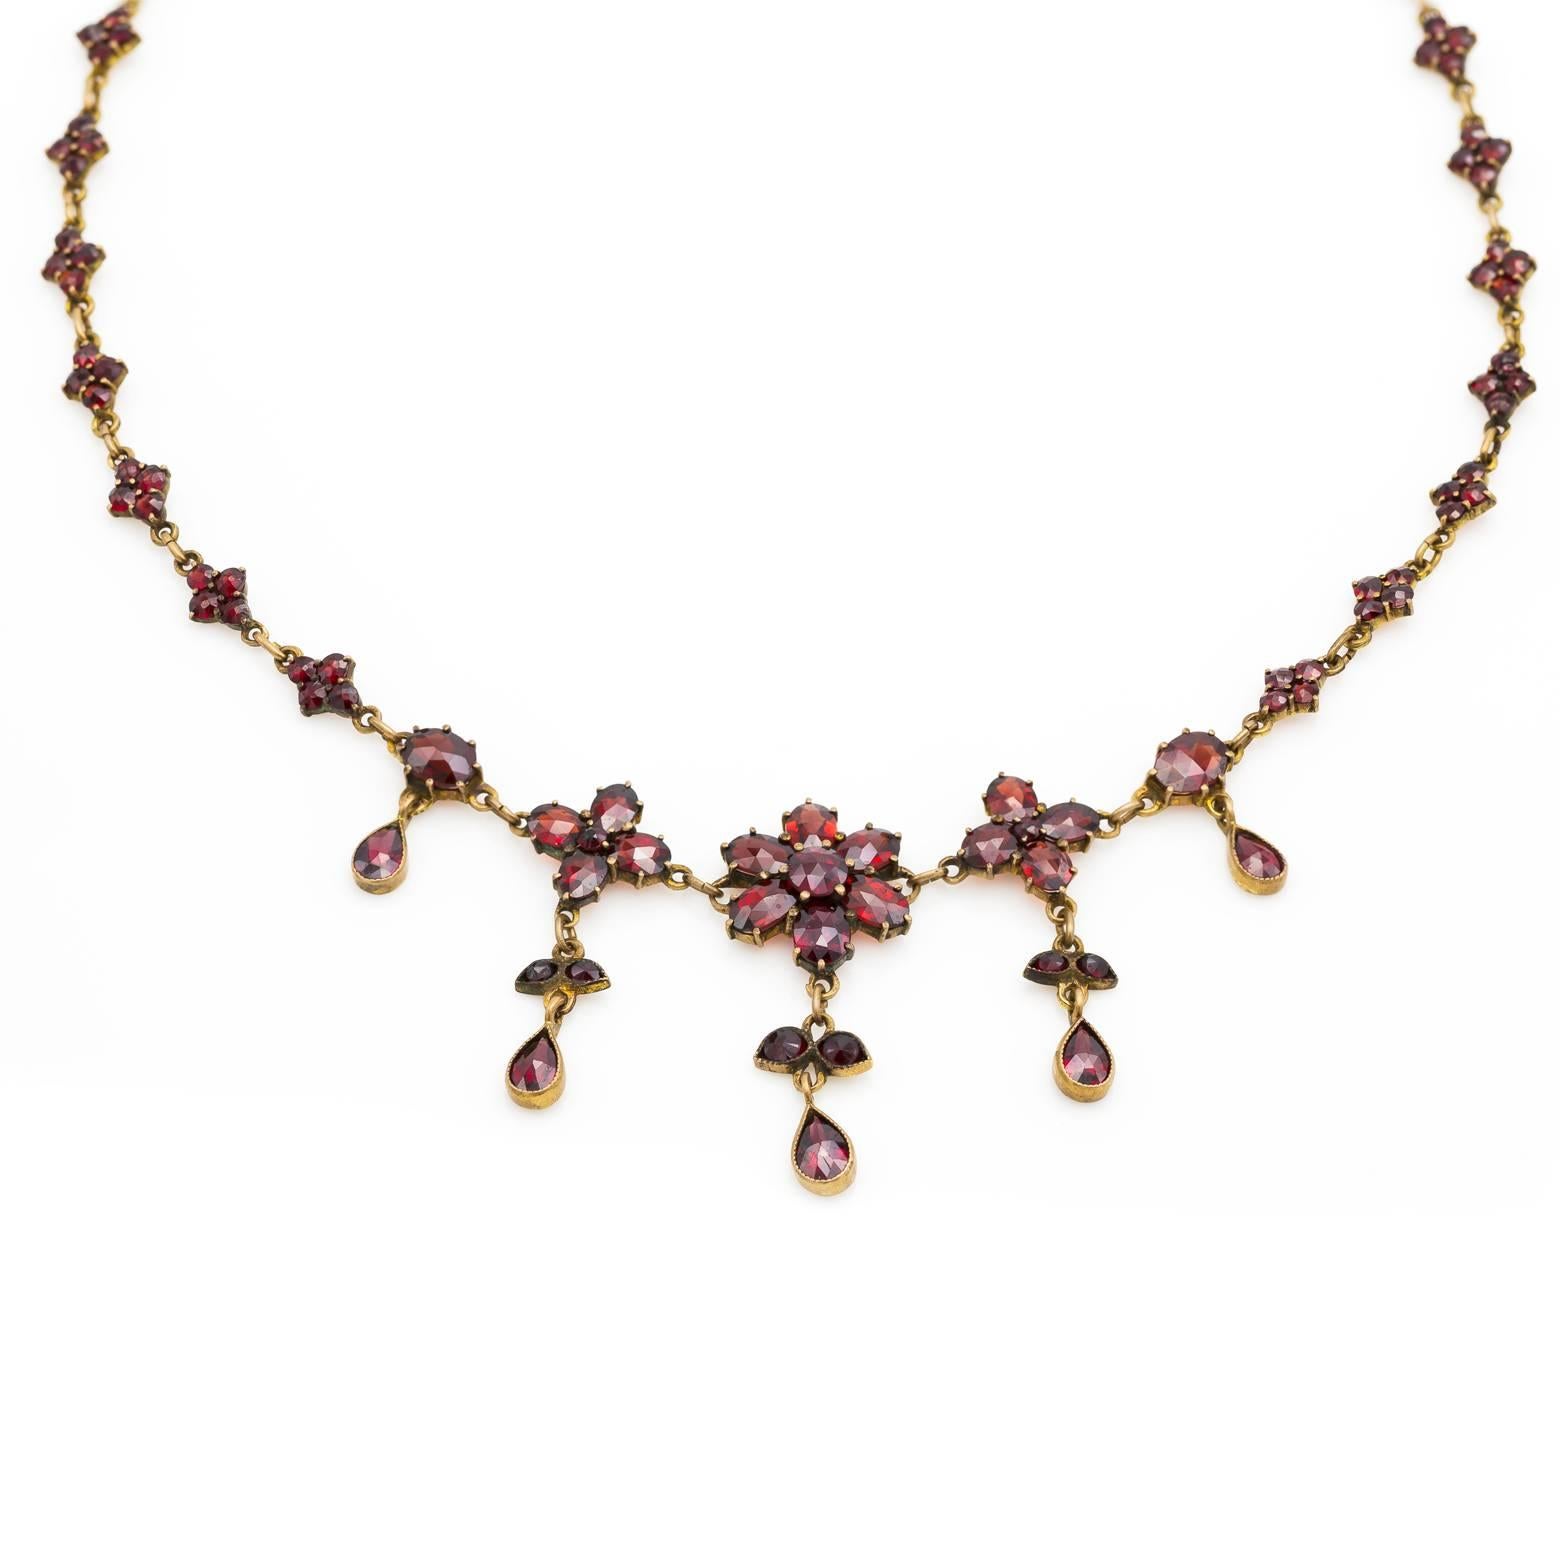 Women's Victorian Garnet Necklace in a Floral Design with Tear Drop Briolettes